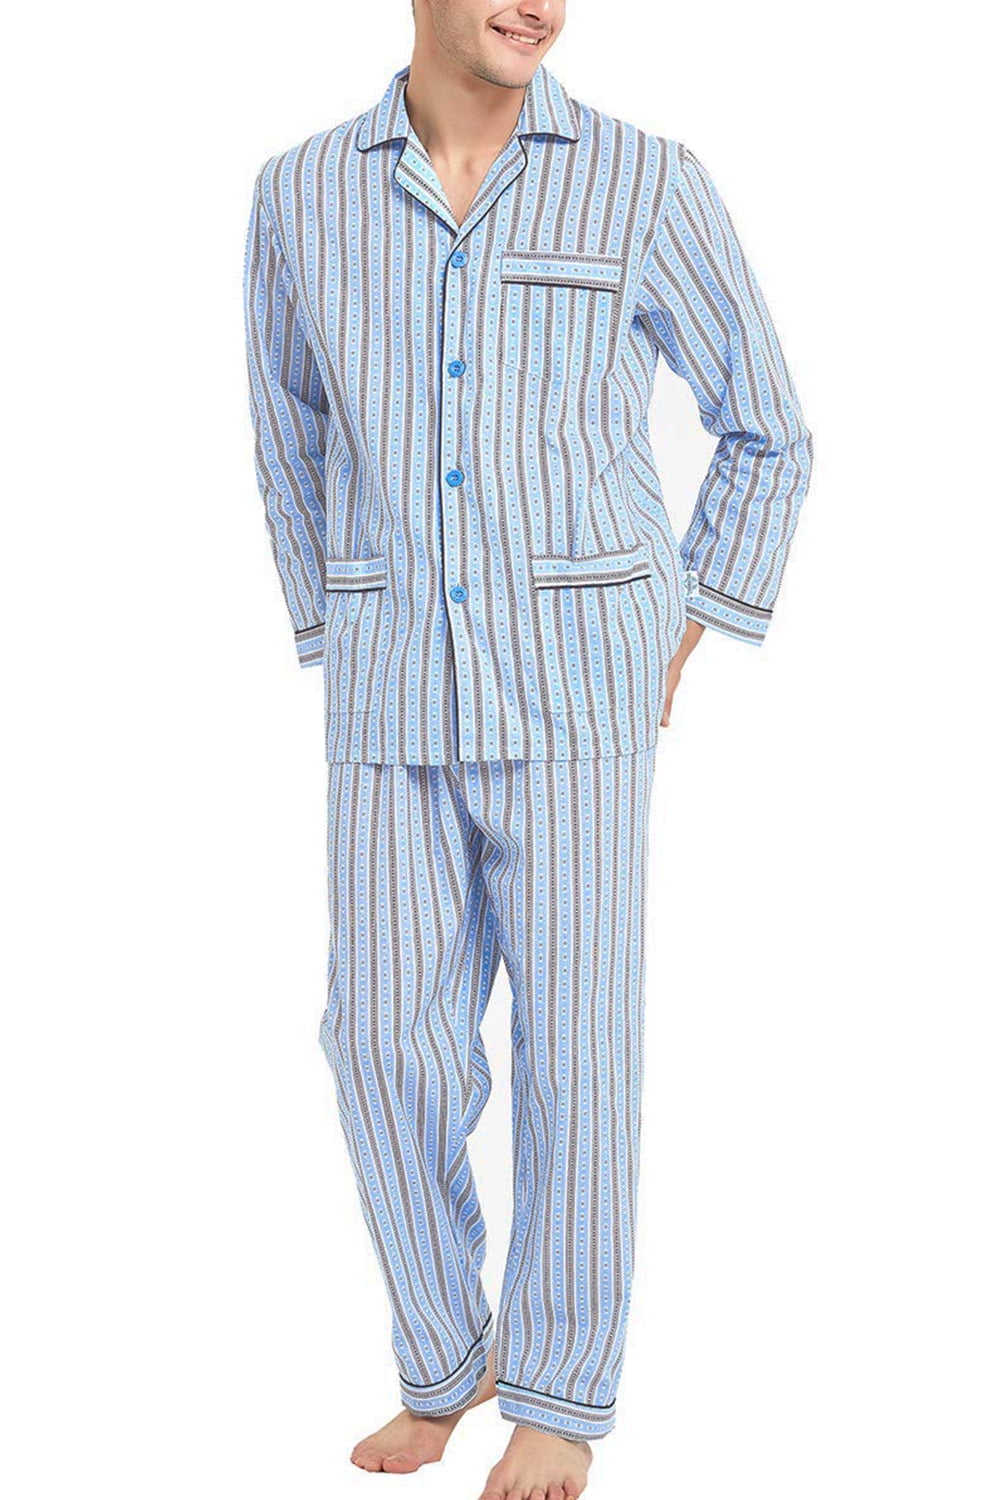 GLOBAL Mens Pajamas Set 100% Cotton Woven Drawstring Sleepwear Set with Top and Pants/Bottoms 